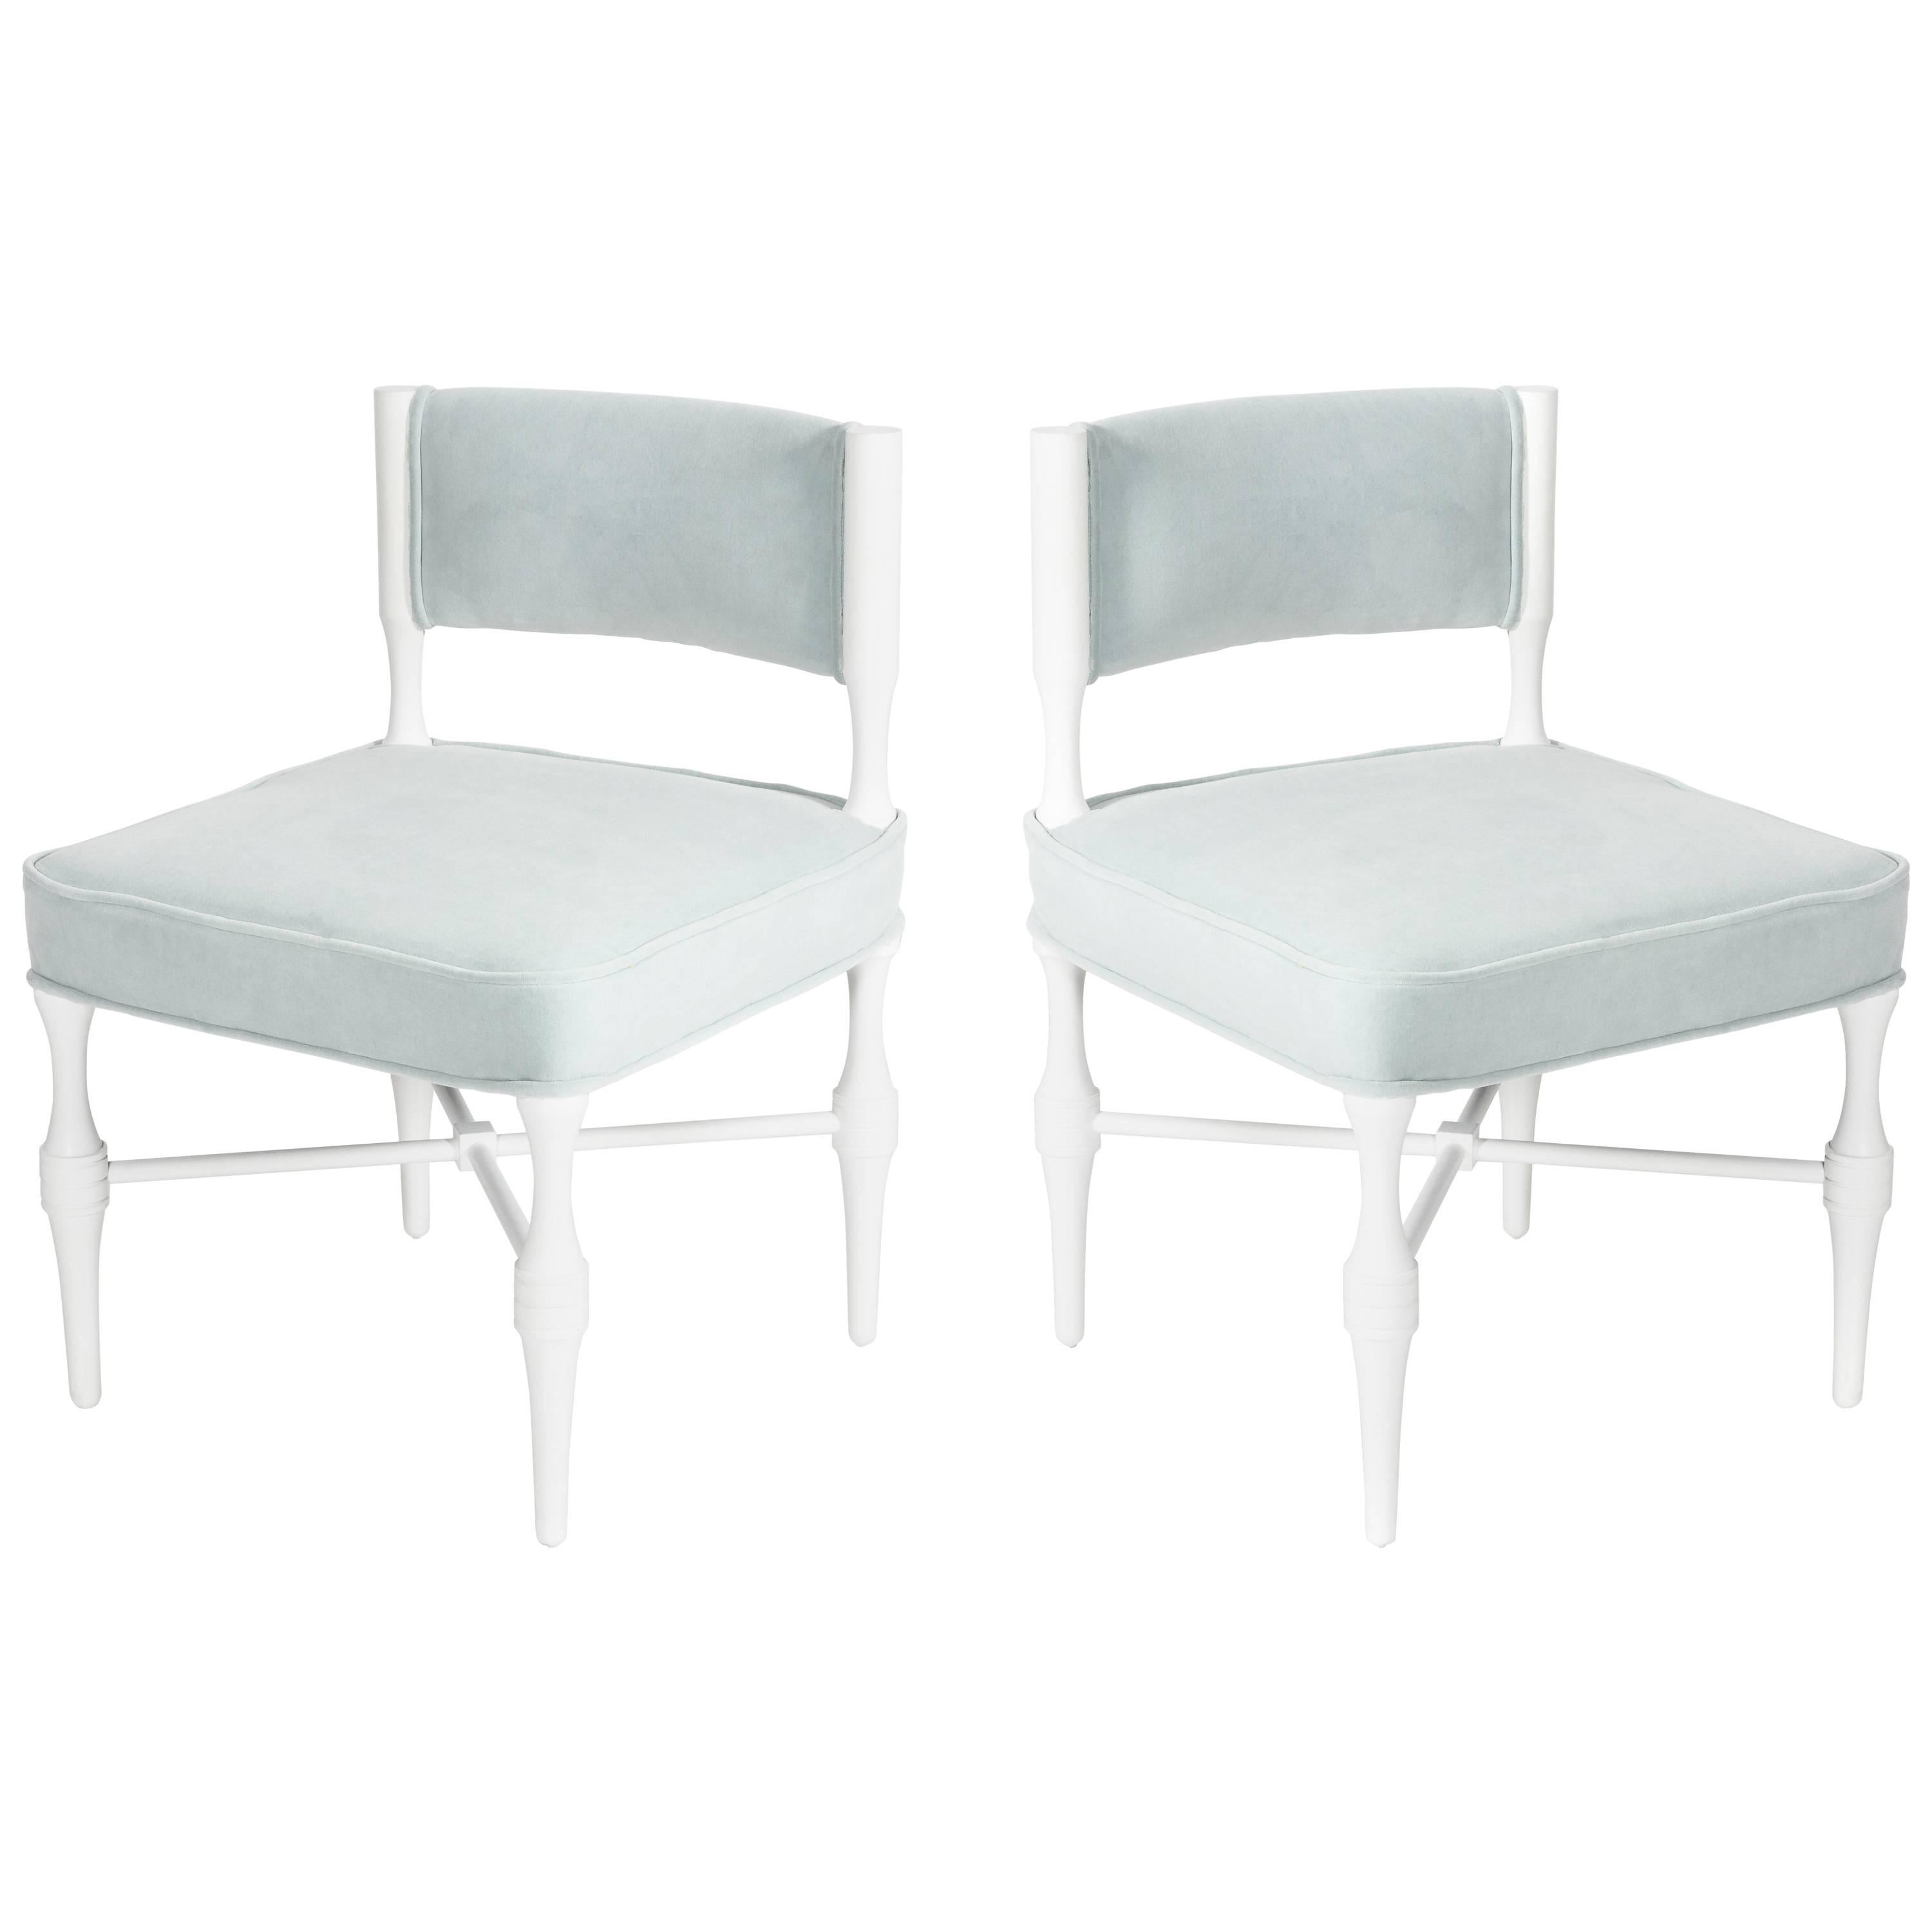 Pair of Tommi Parzinger Petite Slipper or Vanity Chairs